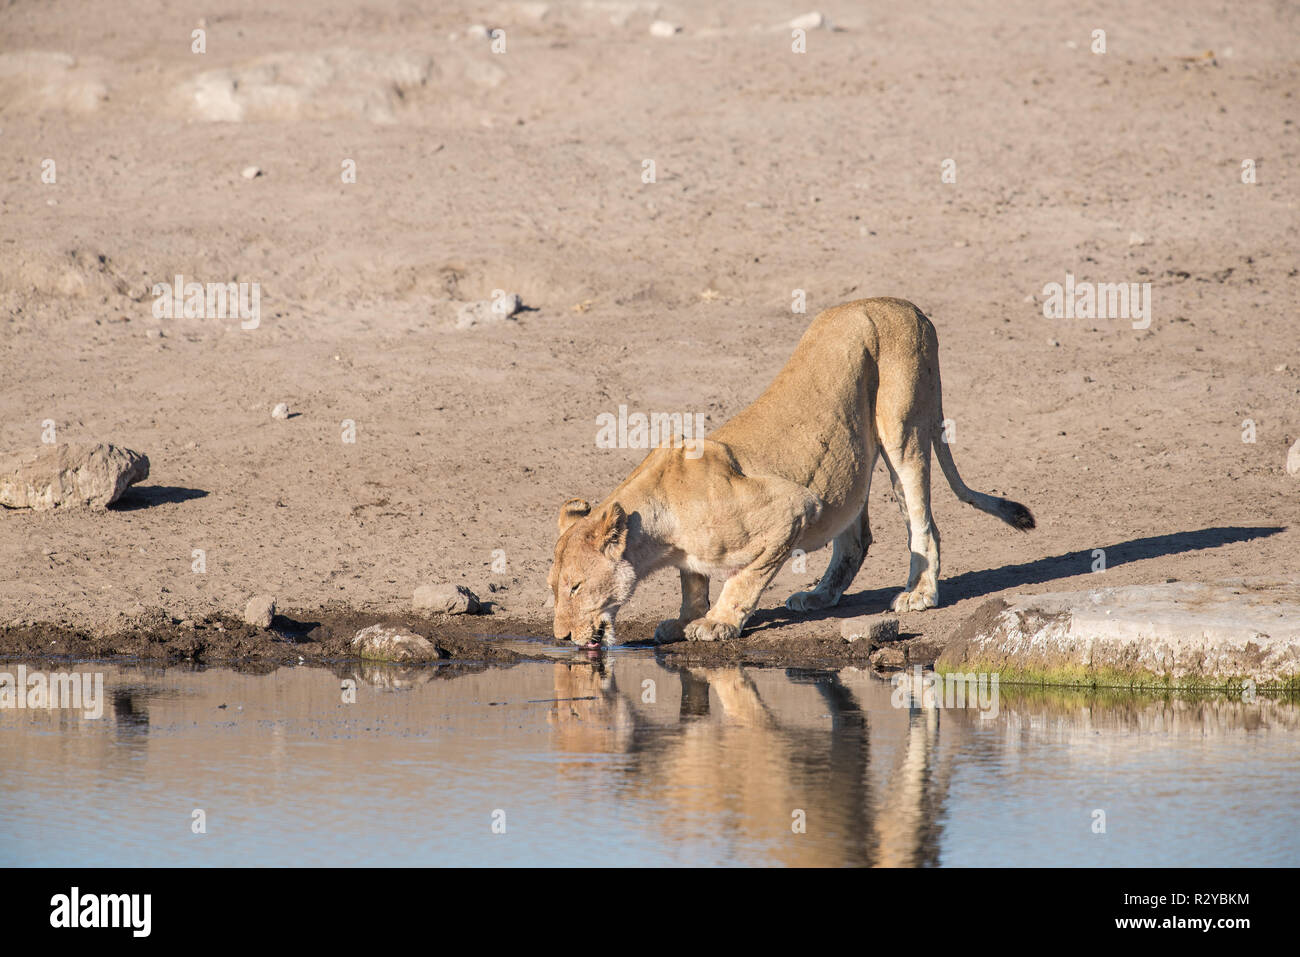 One lioness drinking fram a waterhole Stock Photo